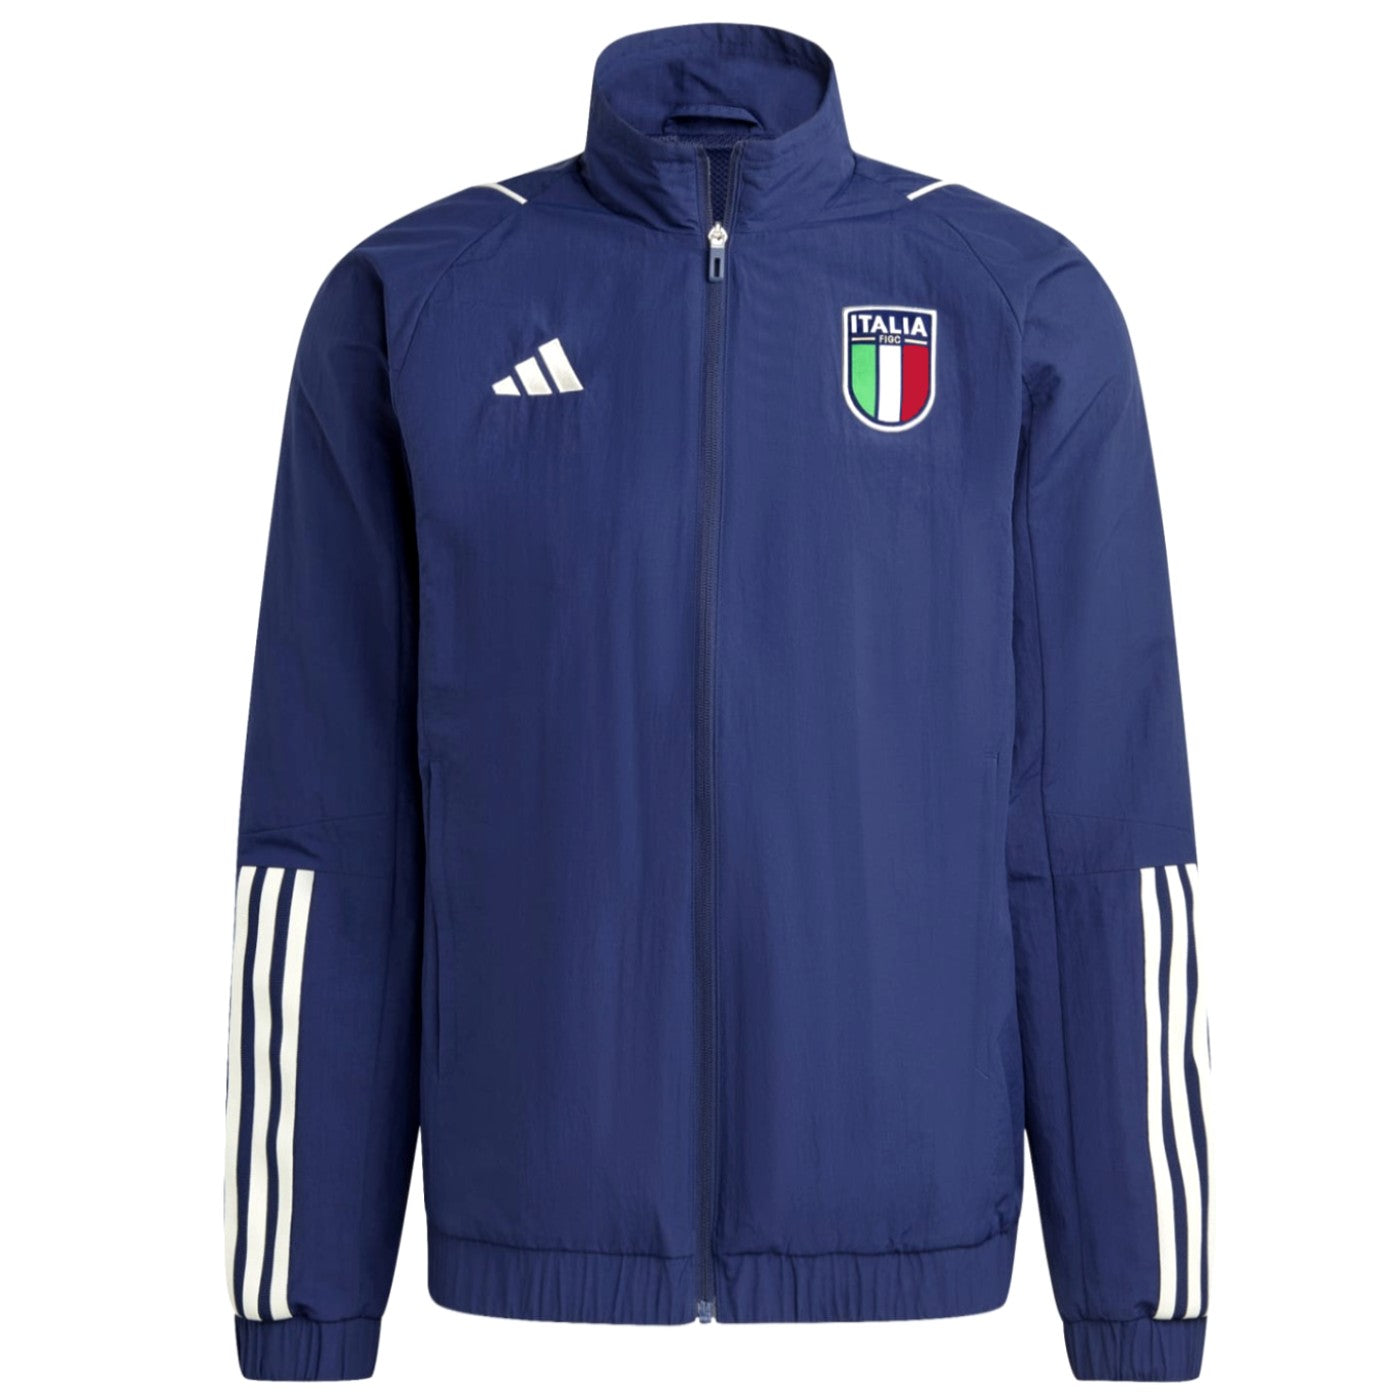 Adidas Italy Mens Tracksuit Jacket Track Top Vintage Retro Italia size S 